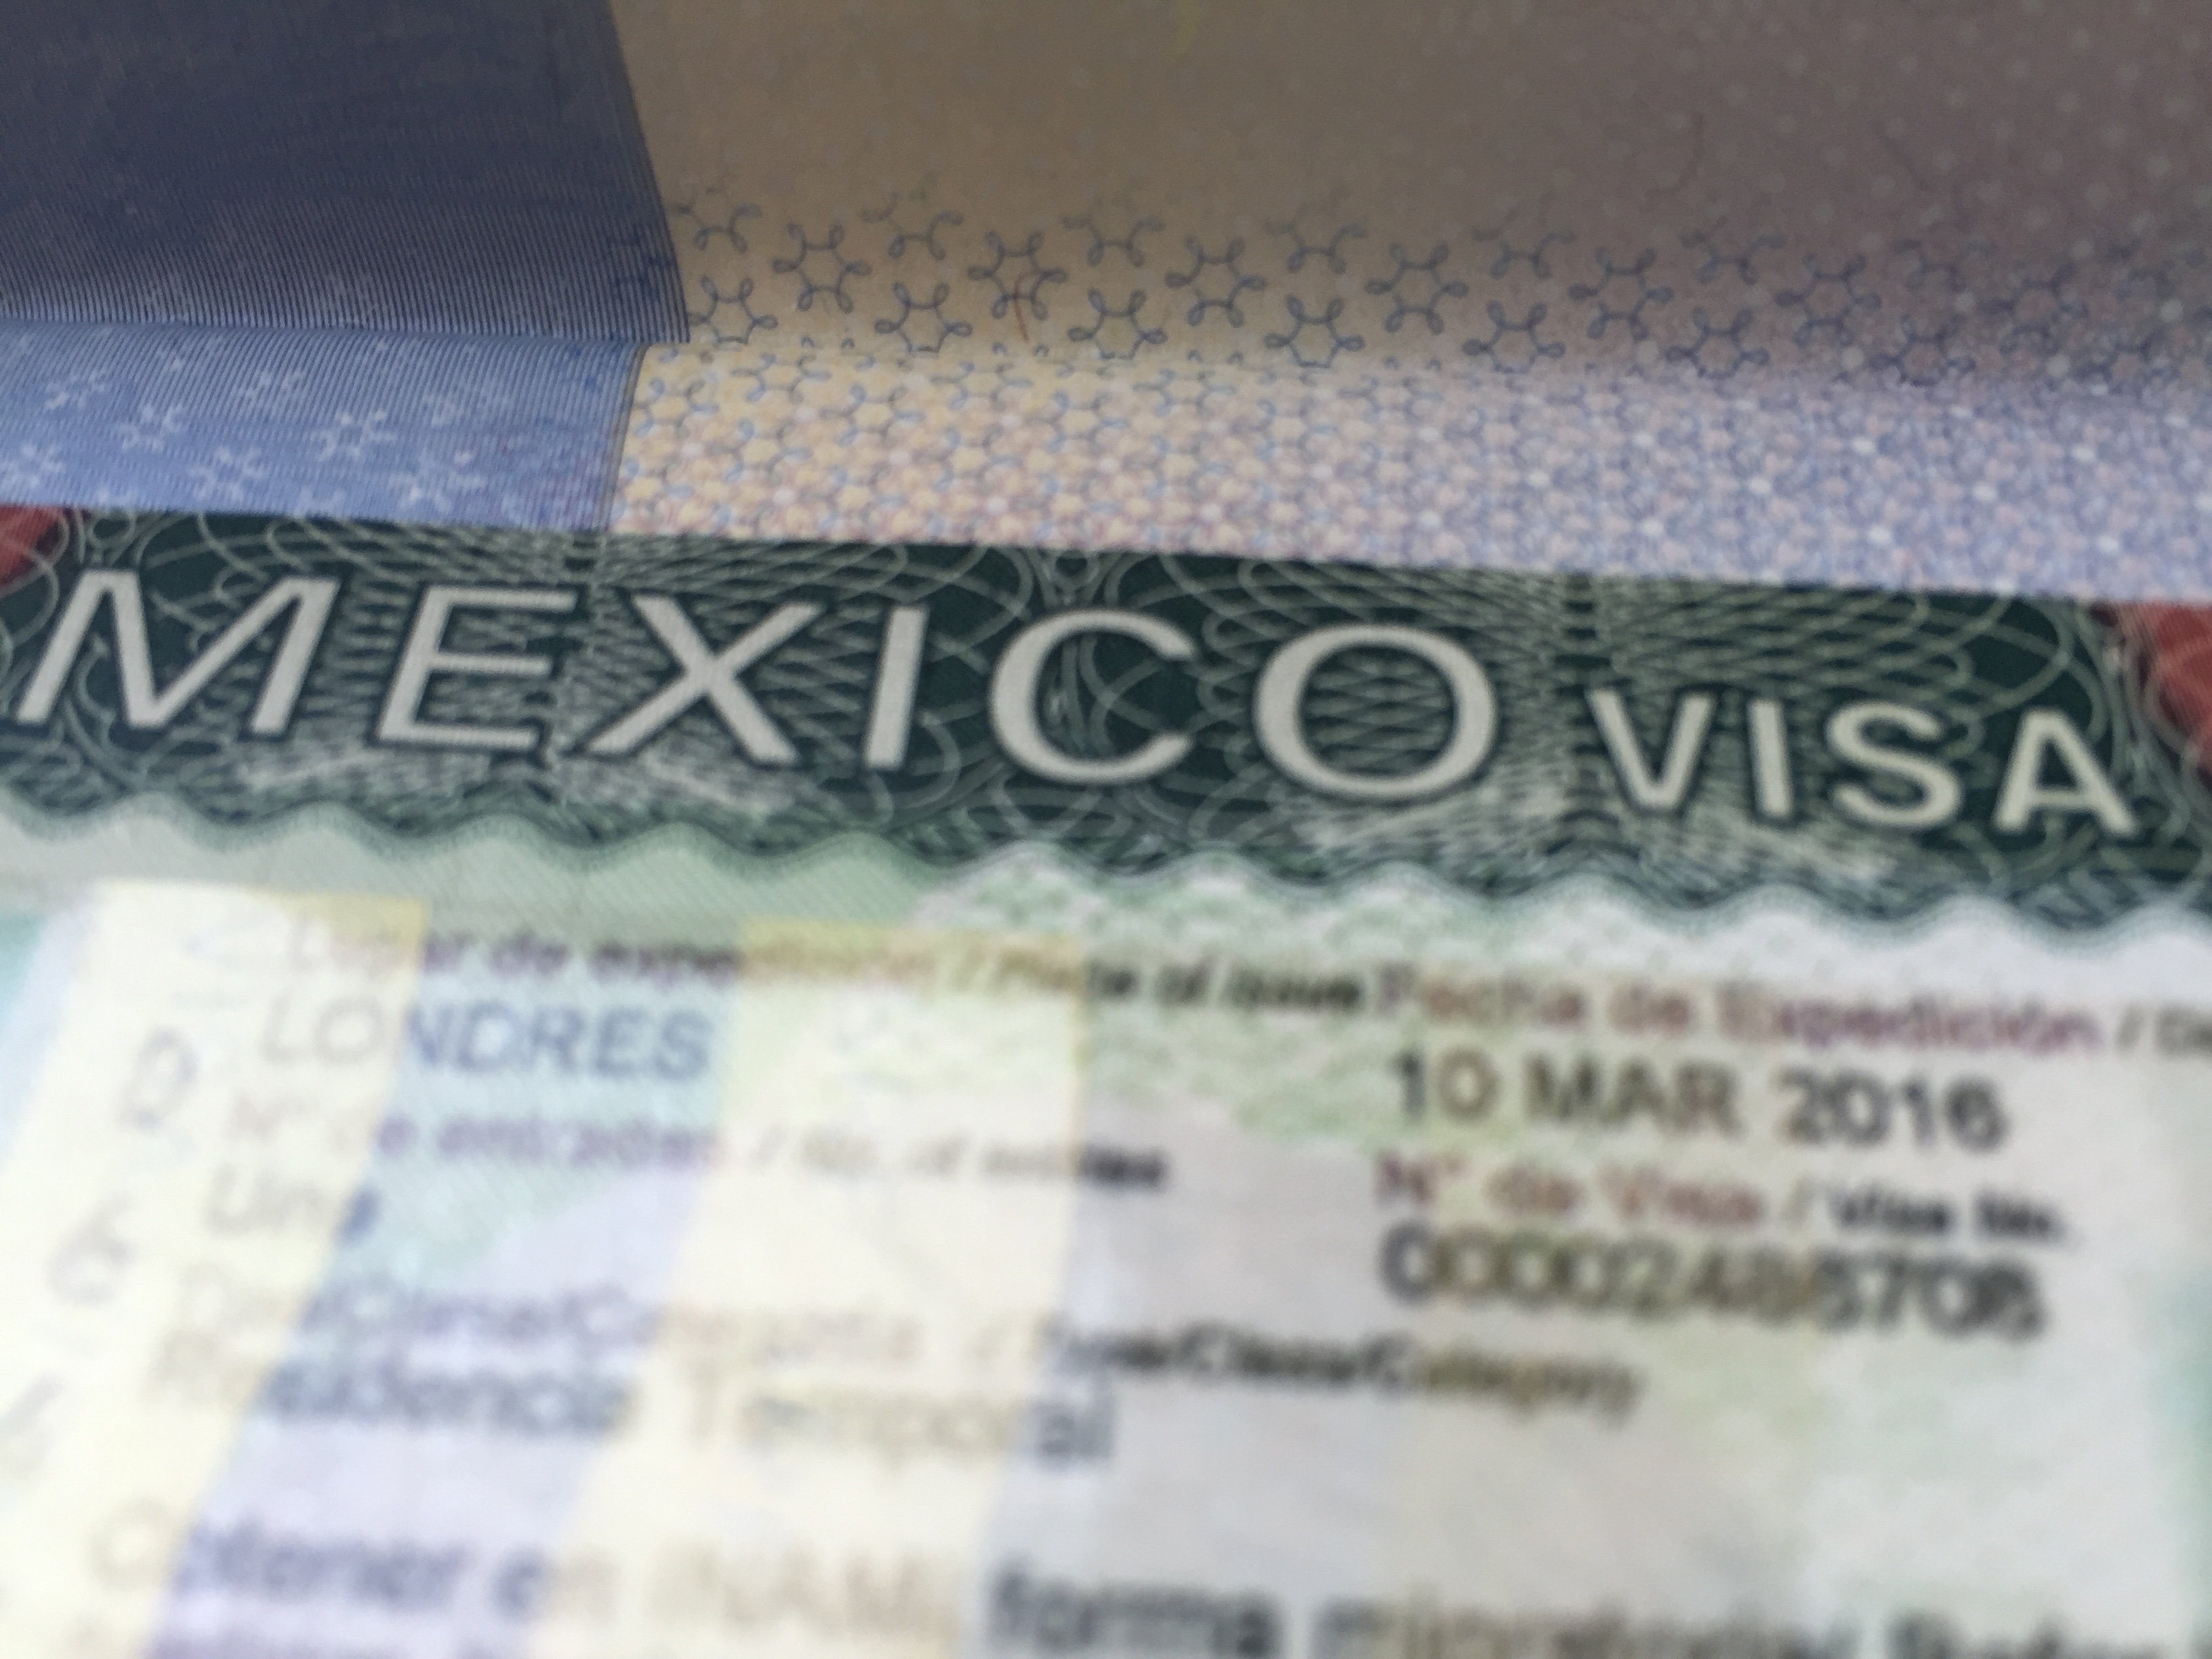 Mexican Visa in a Passport